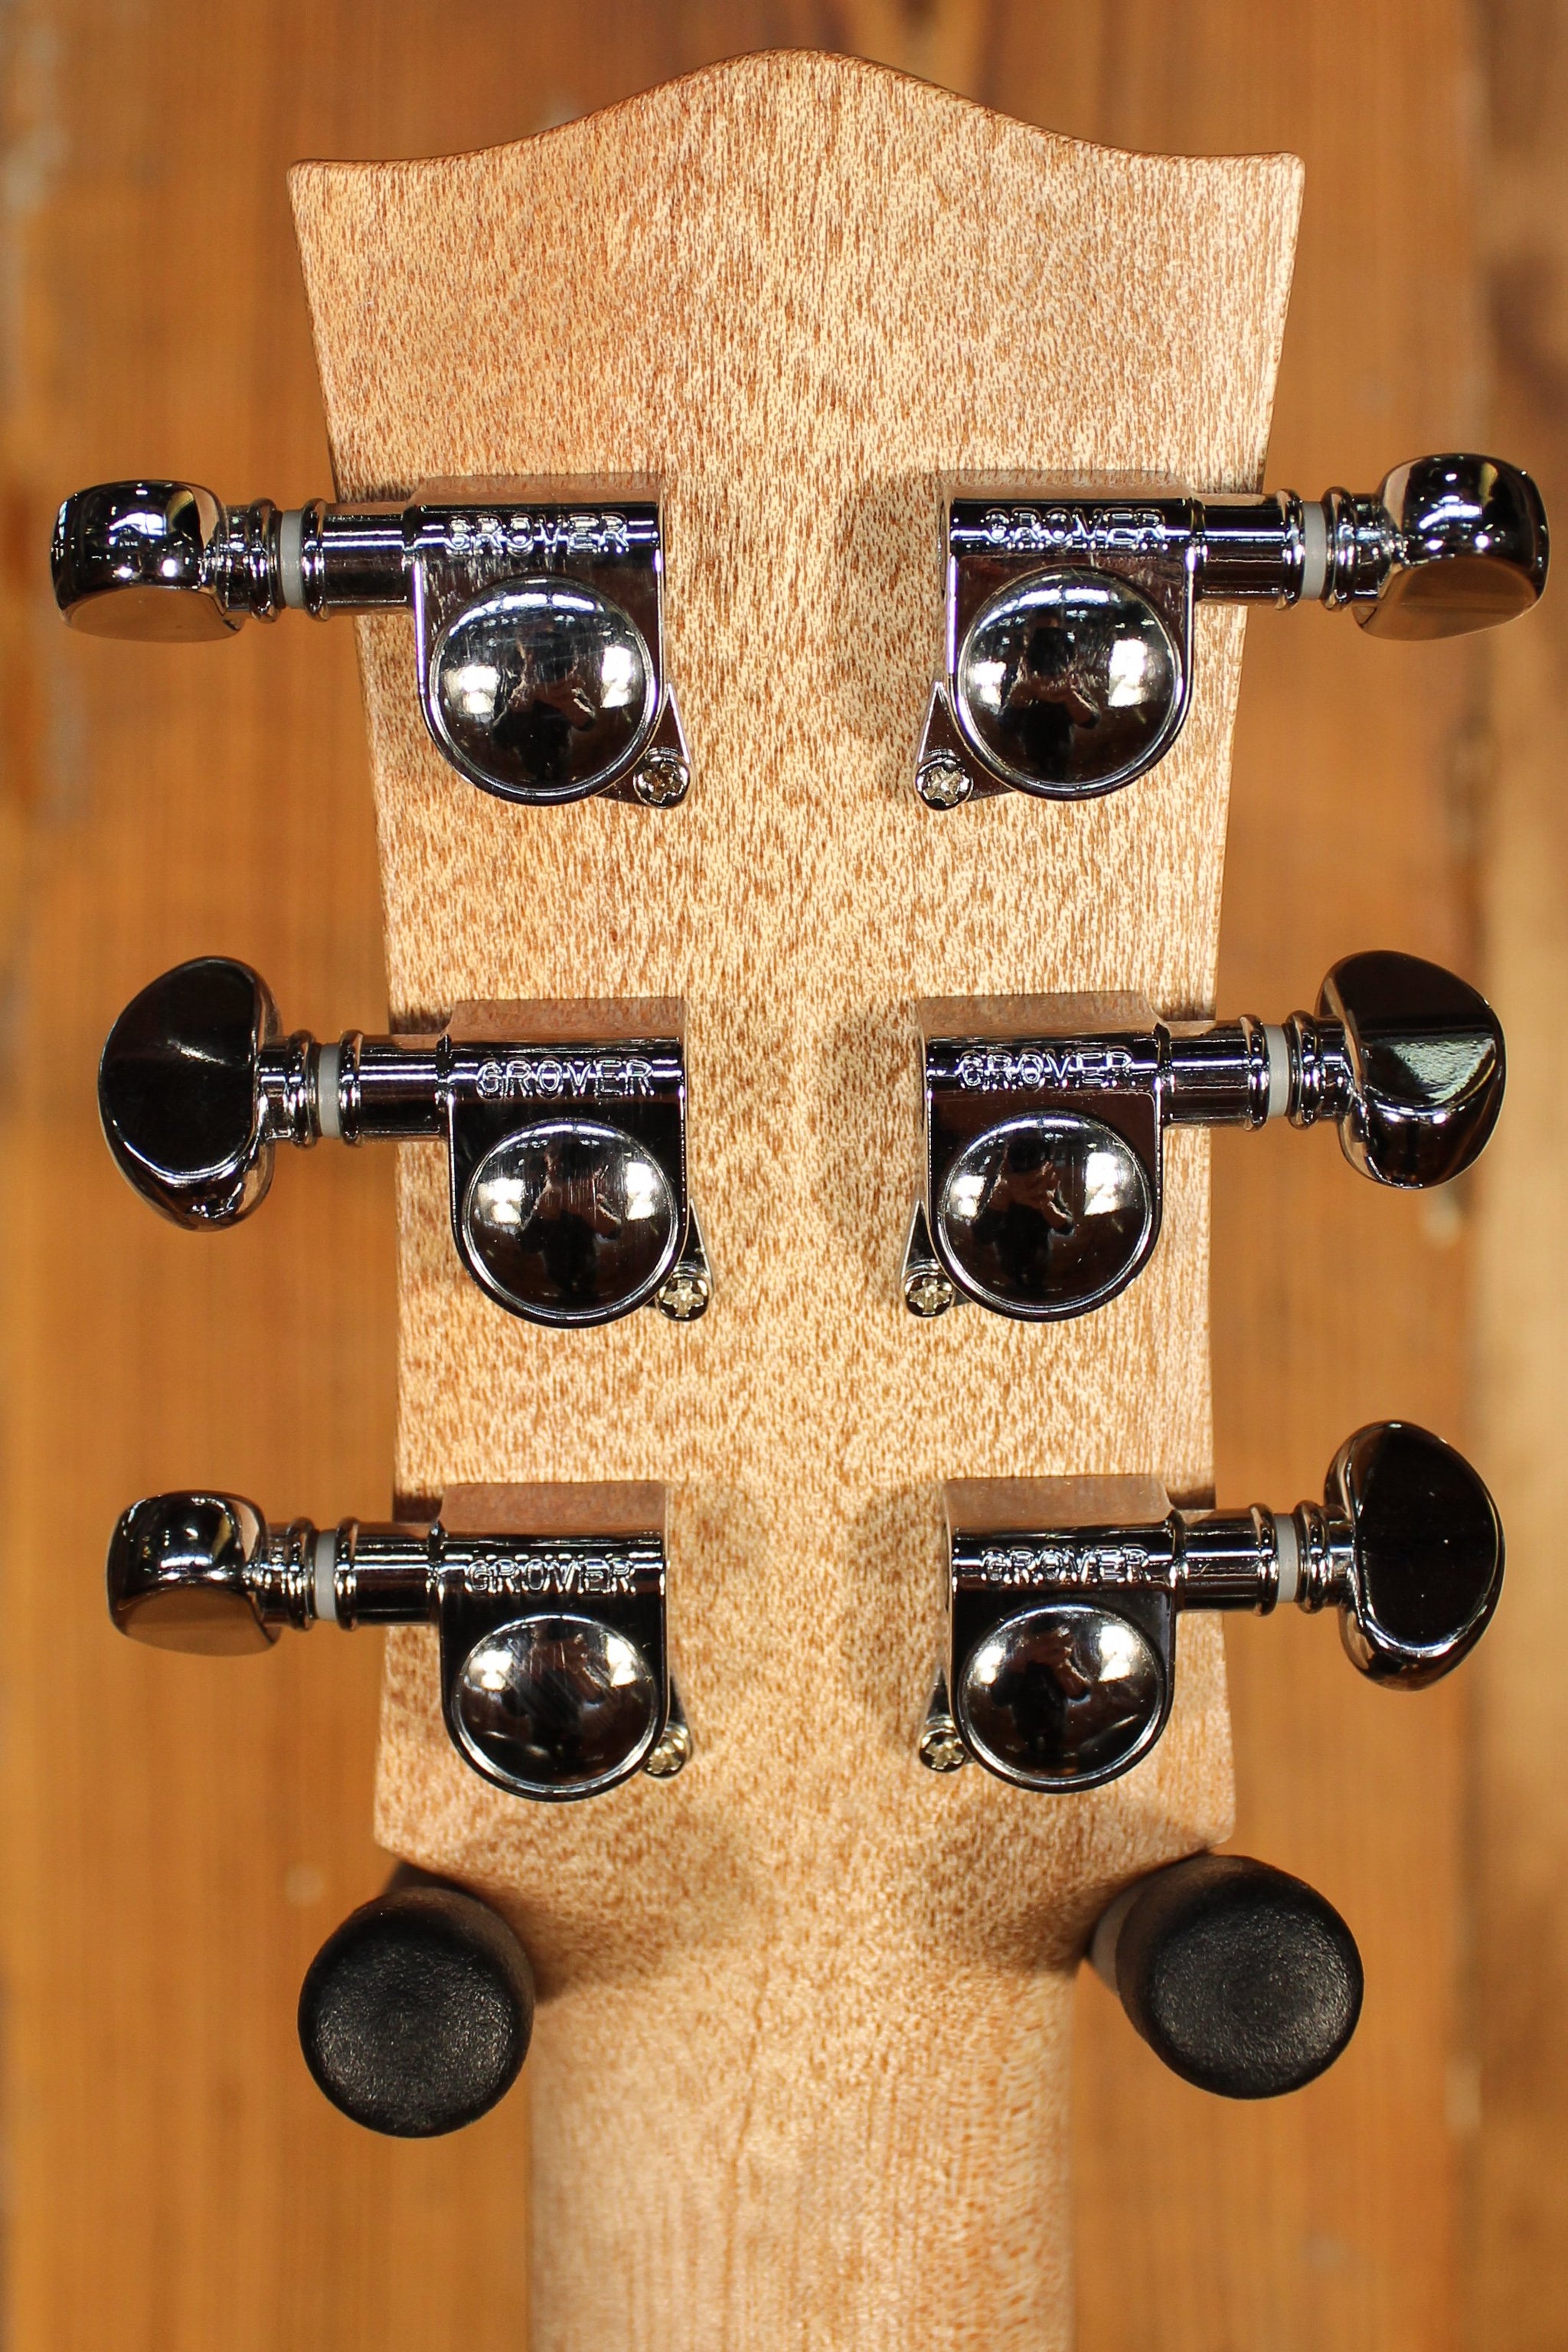 Maton EMBW6 Mini Guitar w/ Blackwood Top, Back & Sides and AP5 Pro Pickup System ID-13538 - Artisan Guitars